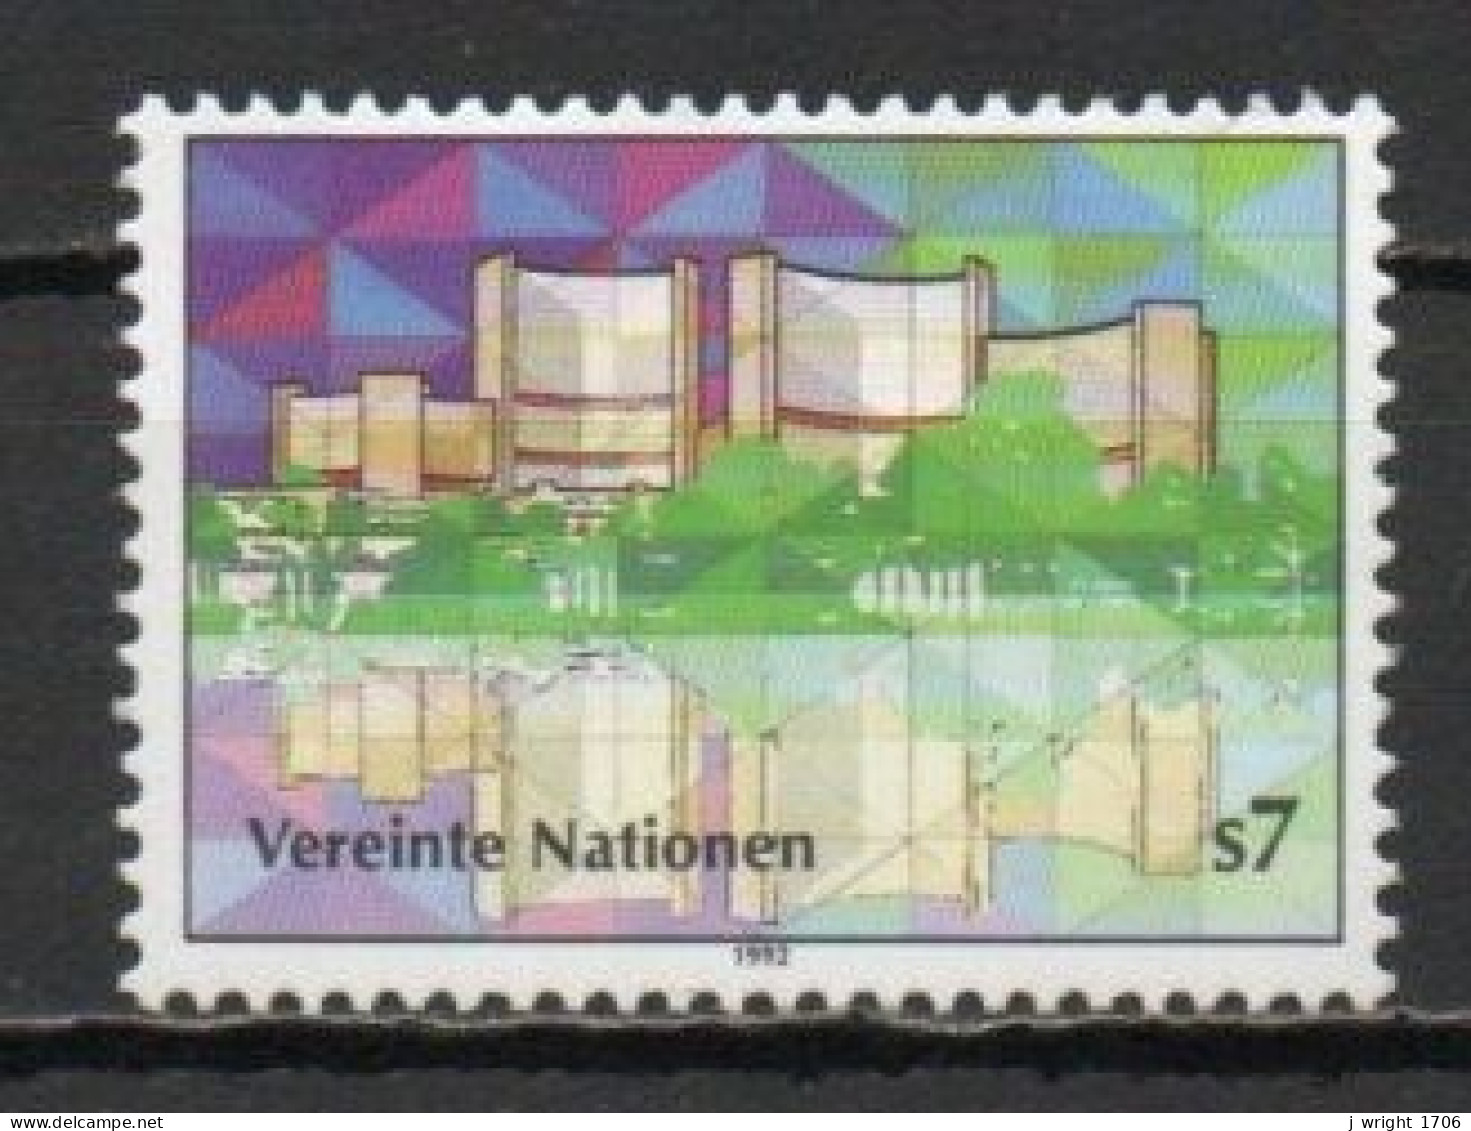 UN/Vienna, 1992, UN Vienna Headquarters, 7S, MNH - Unused Stamps